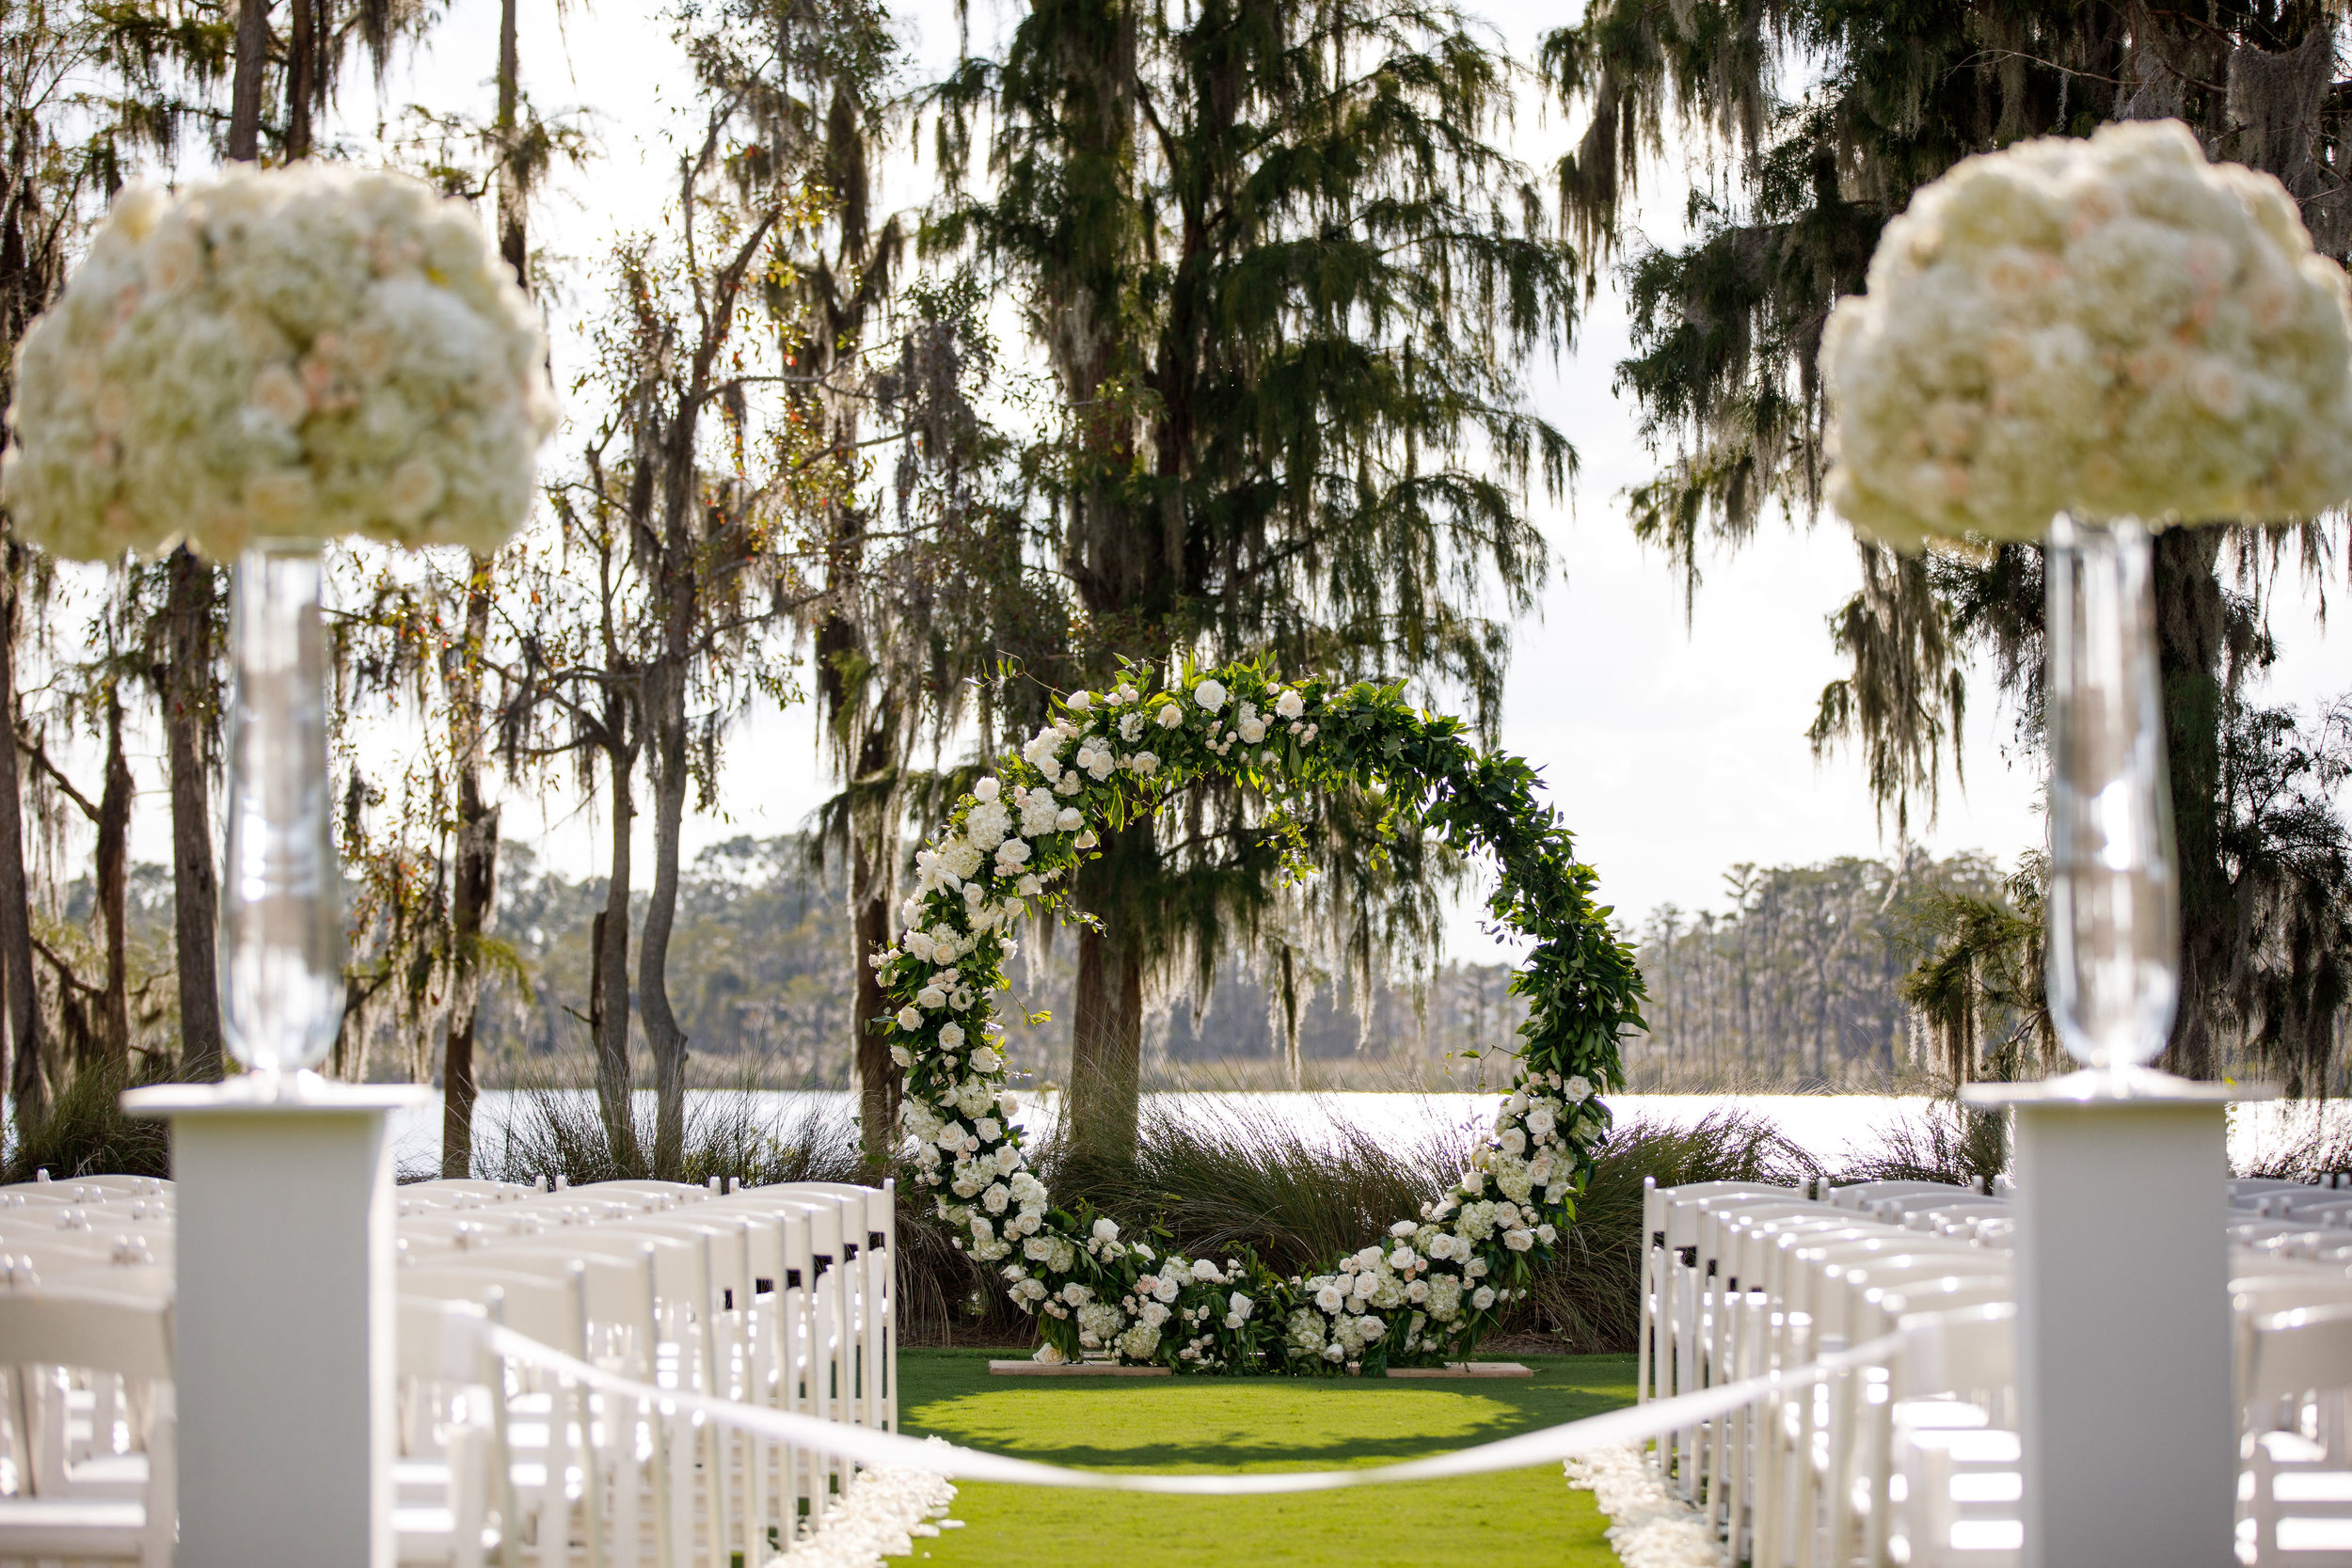  Wedding Photographer: Victoria Angela Photography | Wedding Coordinator: Plan It Event Design and Management | Wedding Location: Isleworth Golf &amp; Country Club  